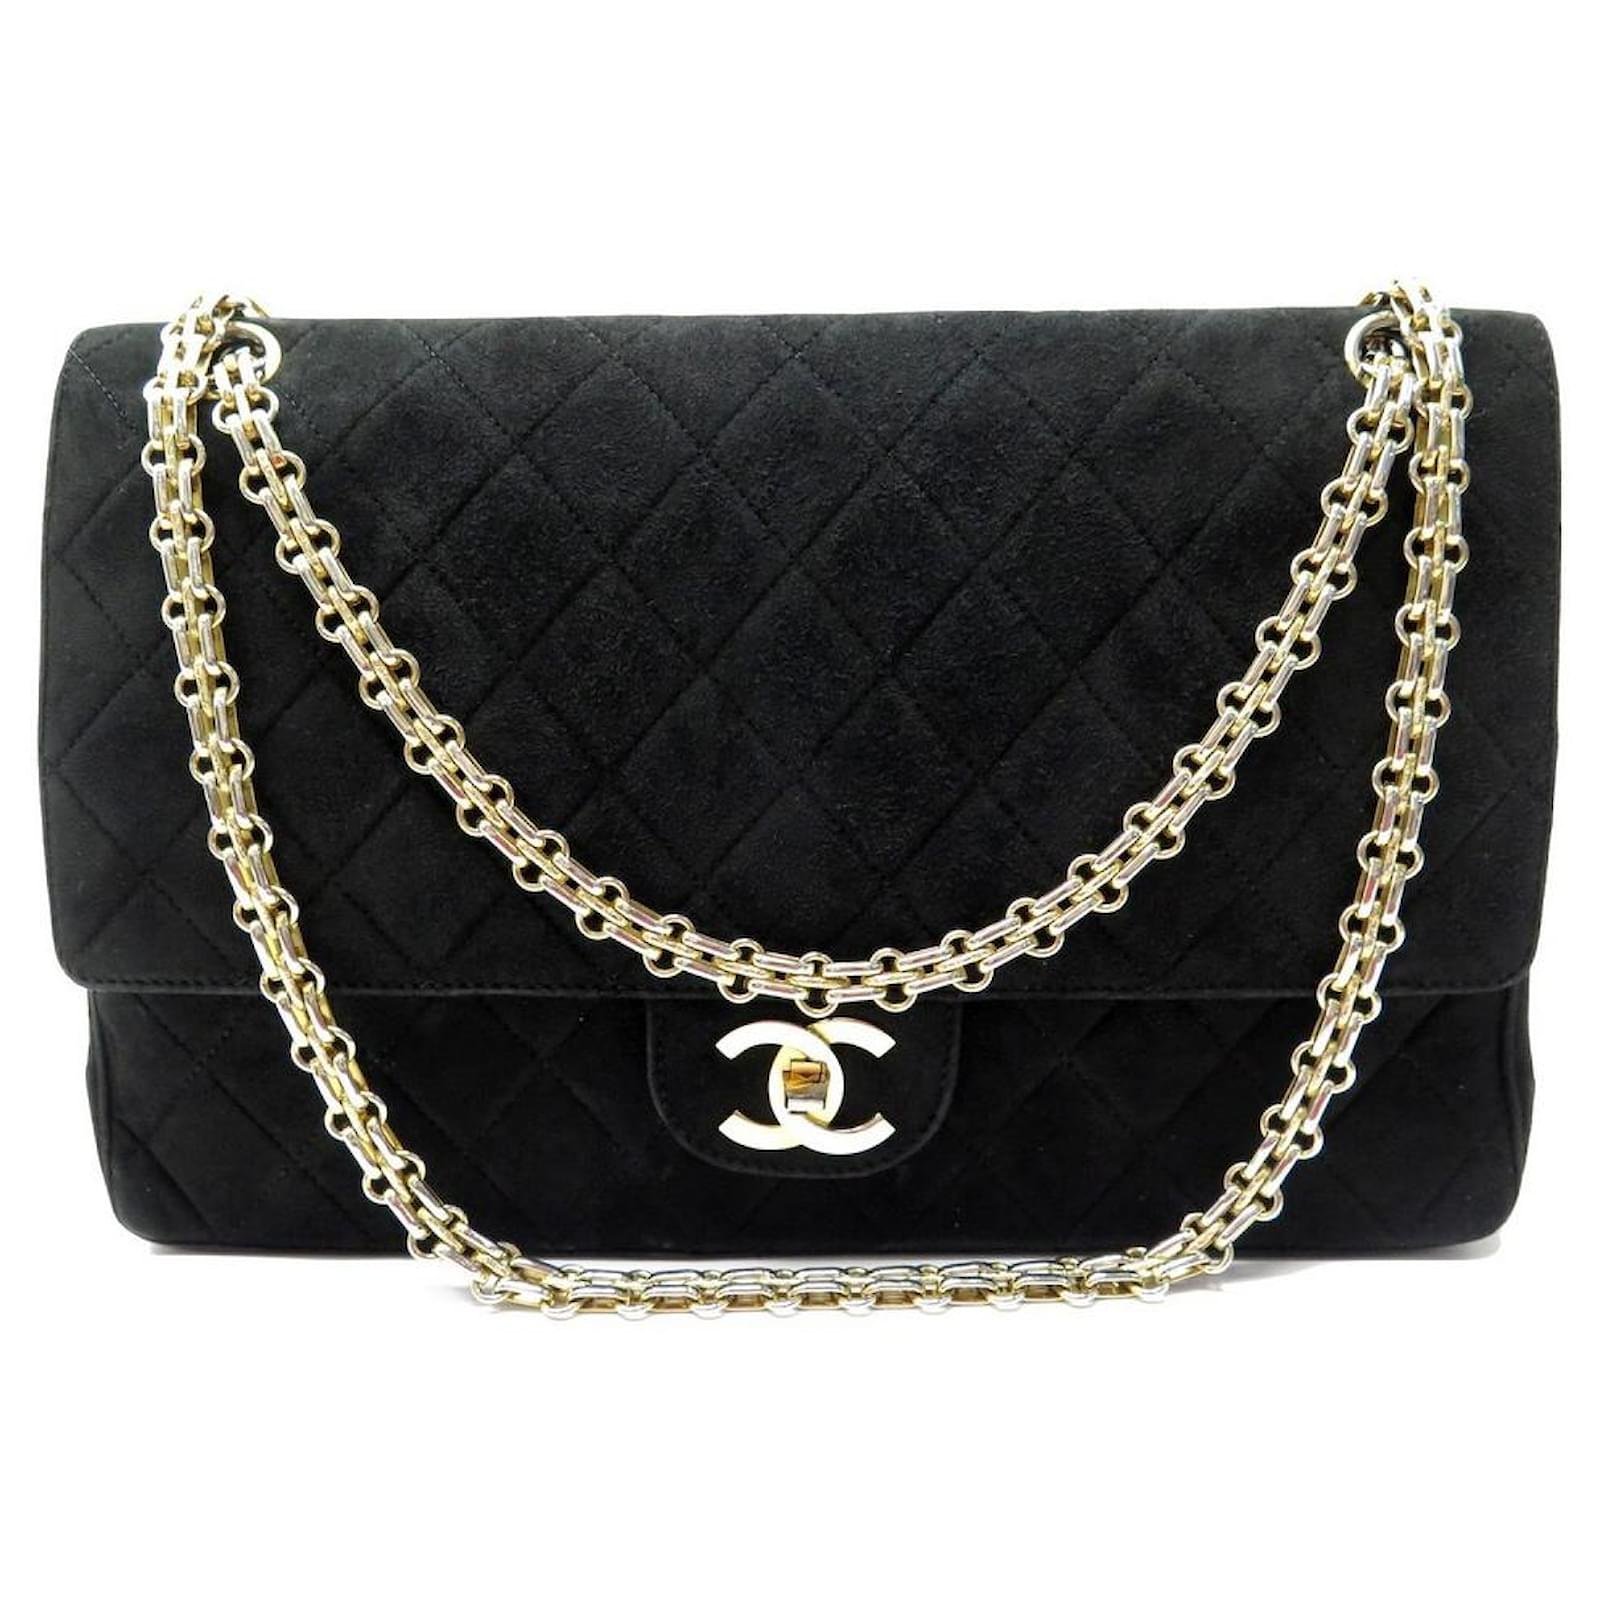 vintage-chanel-lined-flap-handbag-logo-cc-black-suede-suede-hand-bag.jpg